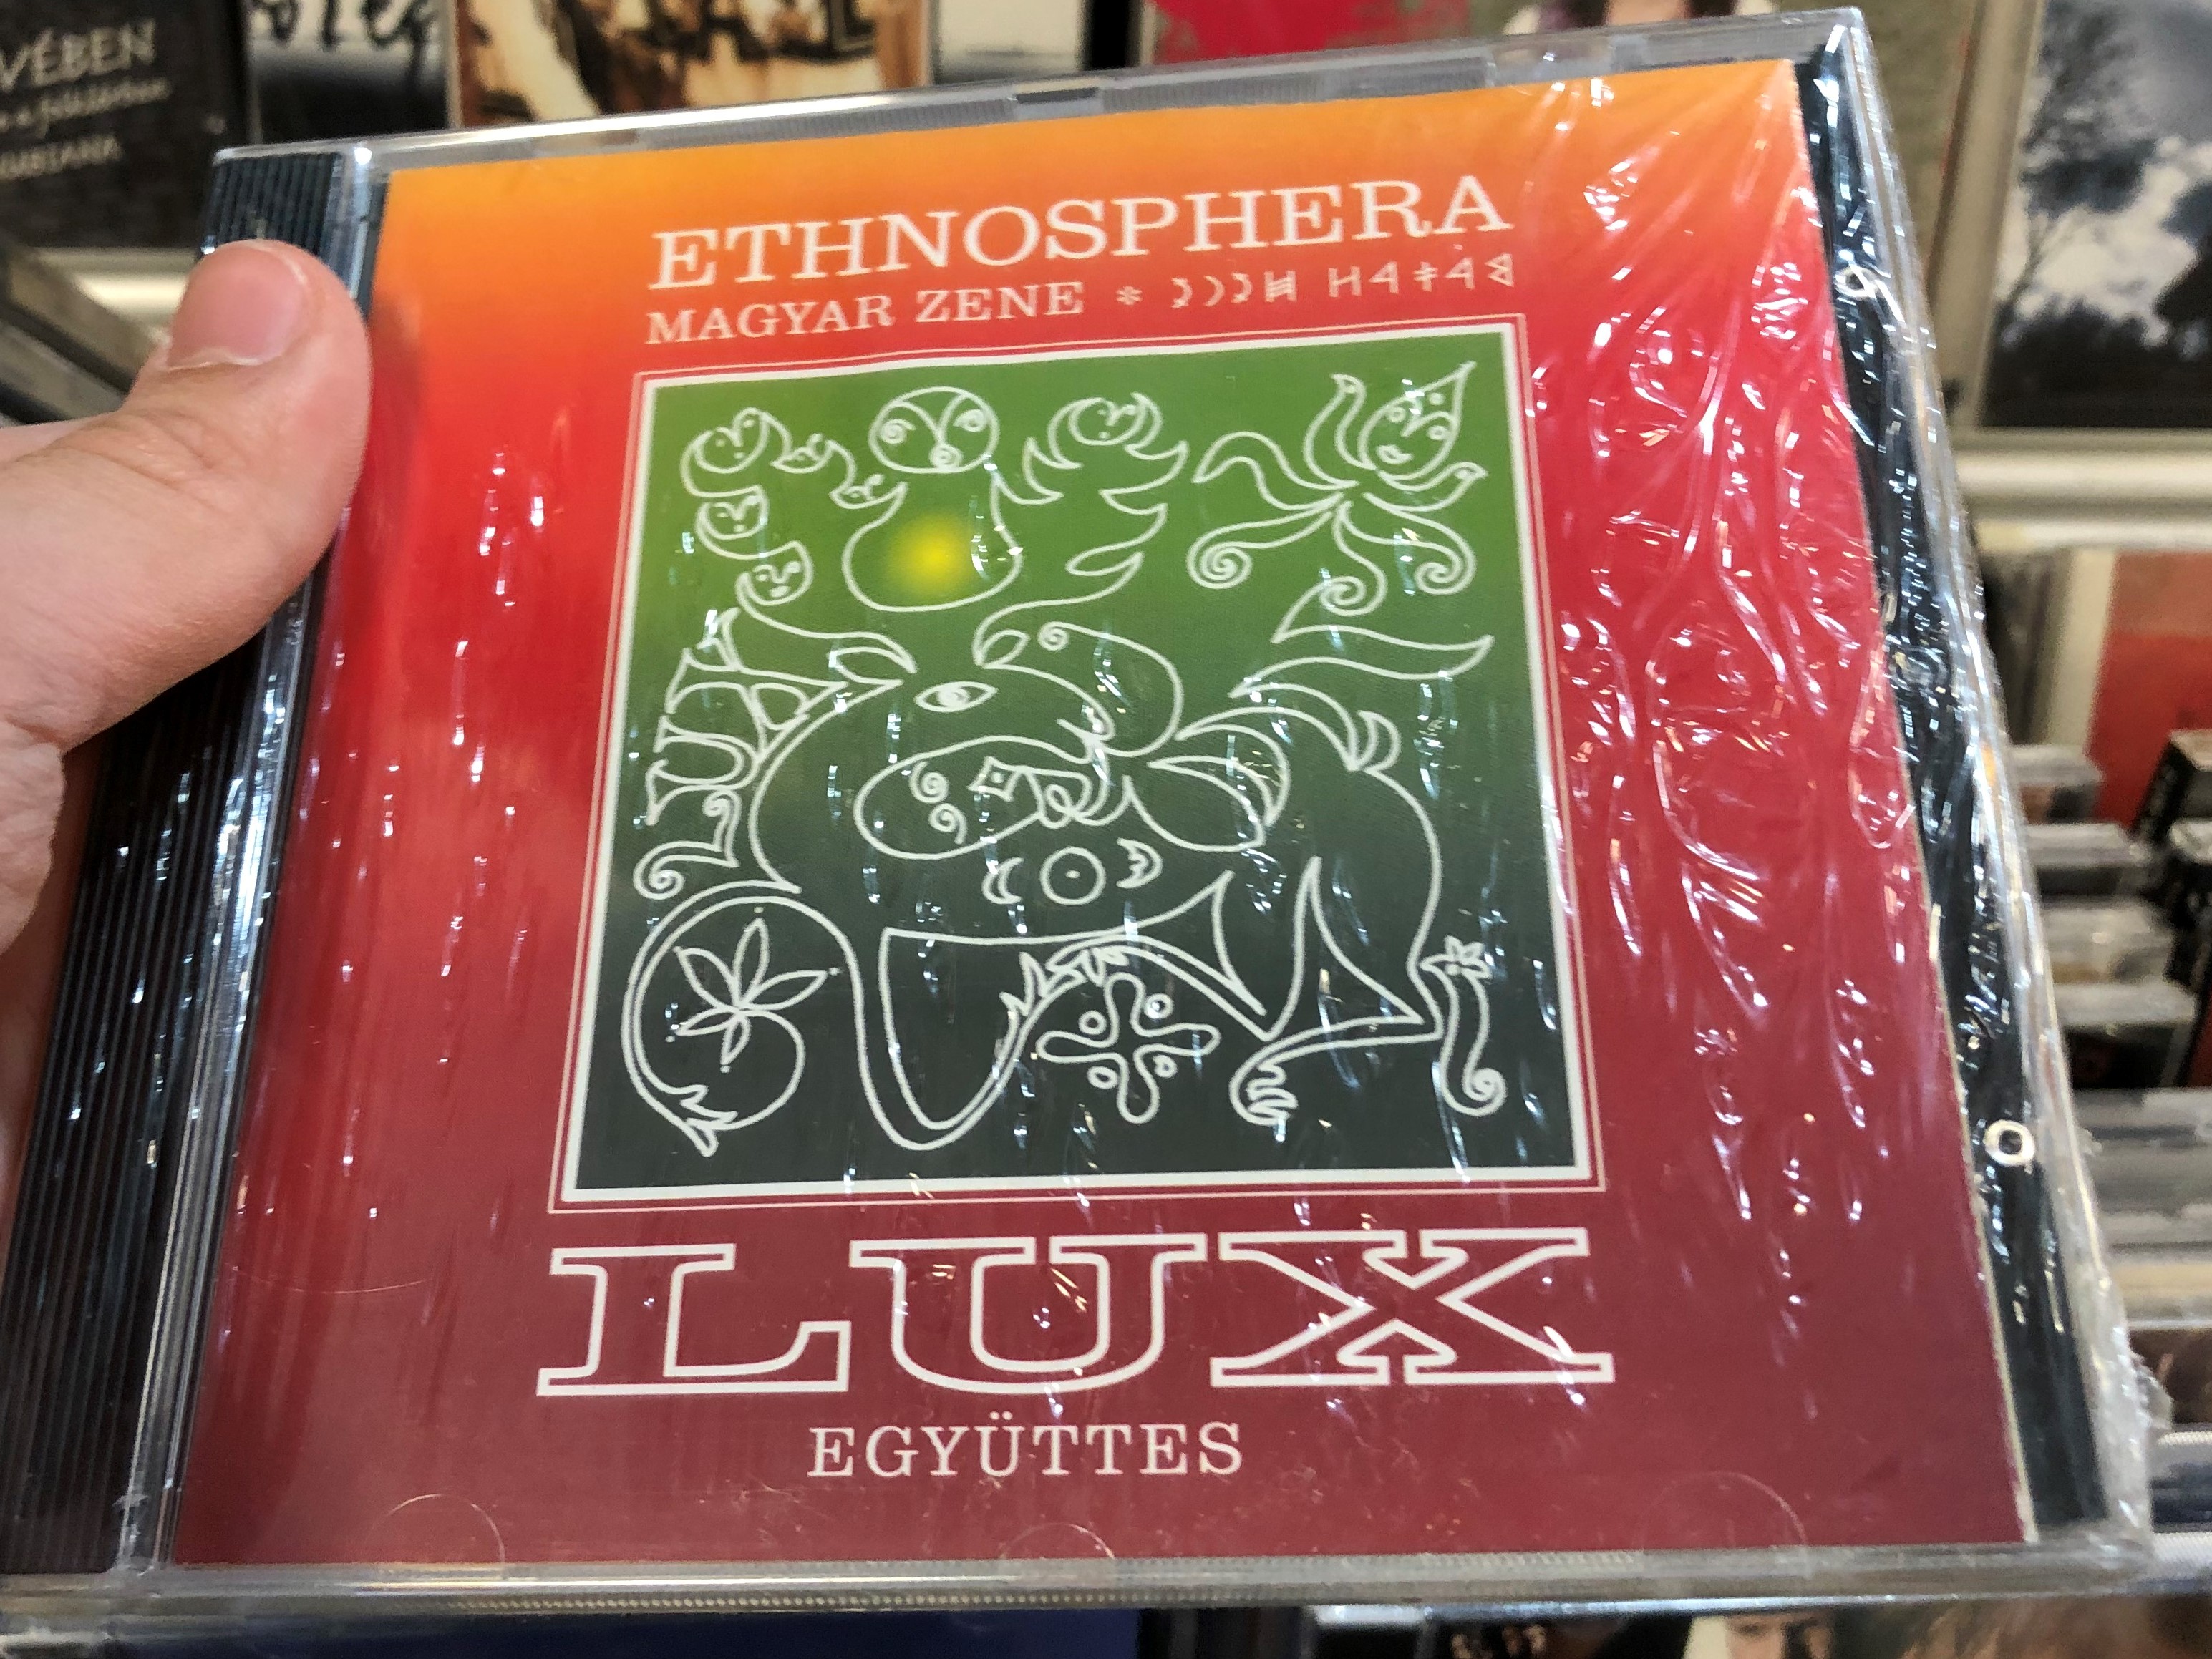 ethnosphera-magyar-zene-lux-egy-ttes-periferic-records-audio-cd-1999-stereo-bgcd-037-1-.jpg